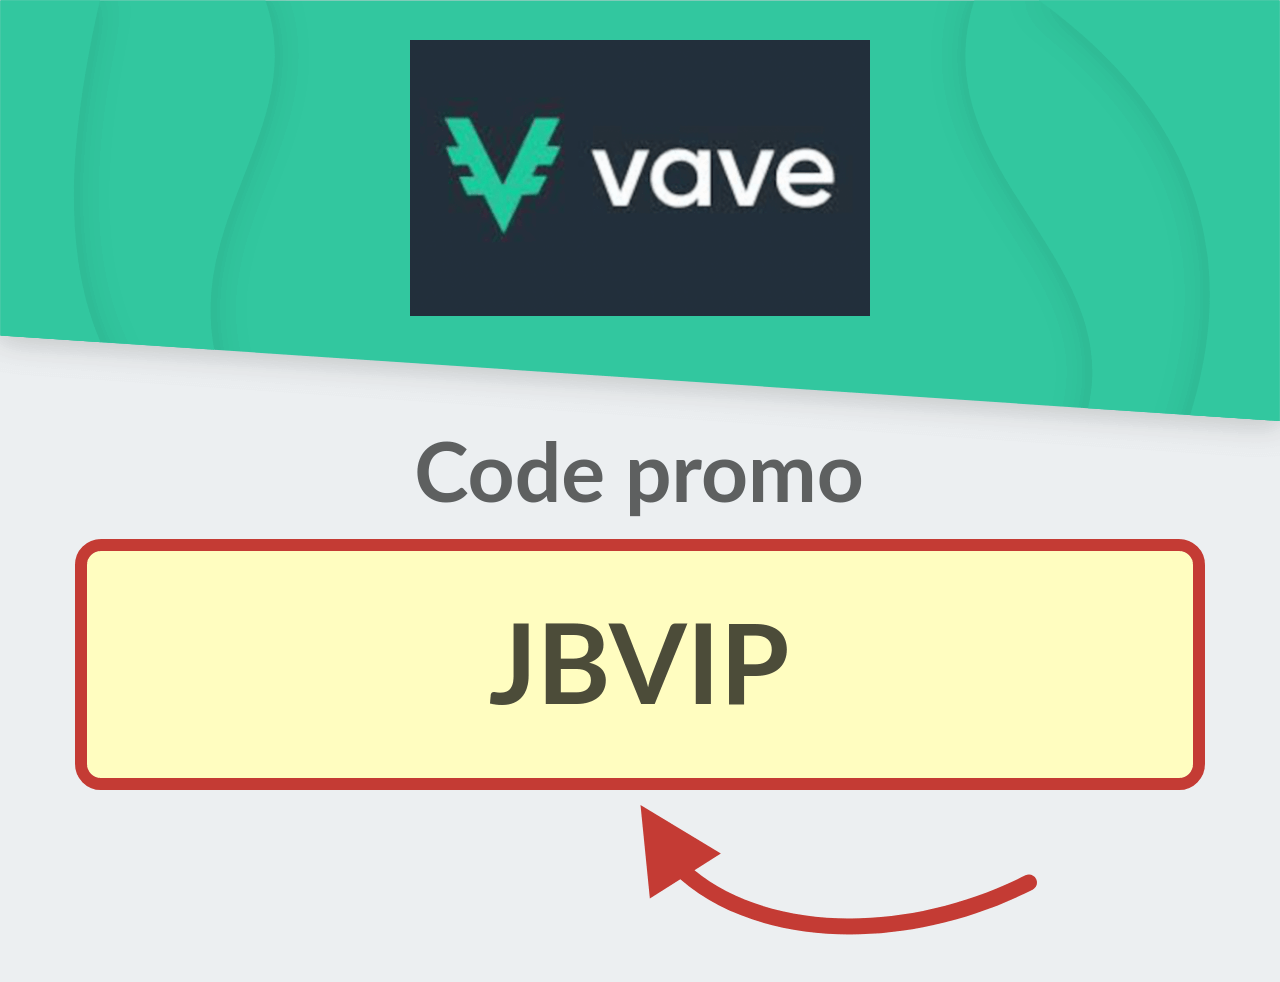 Vave Code Promo